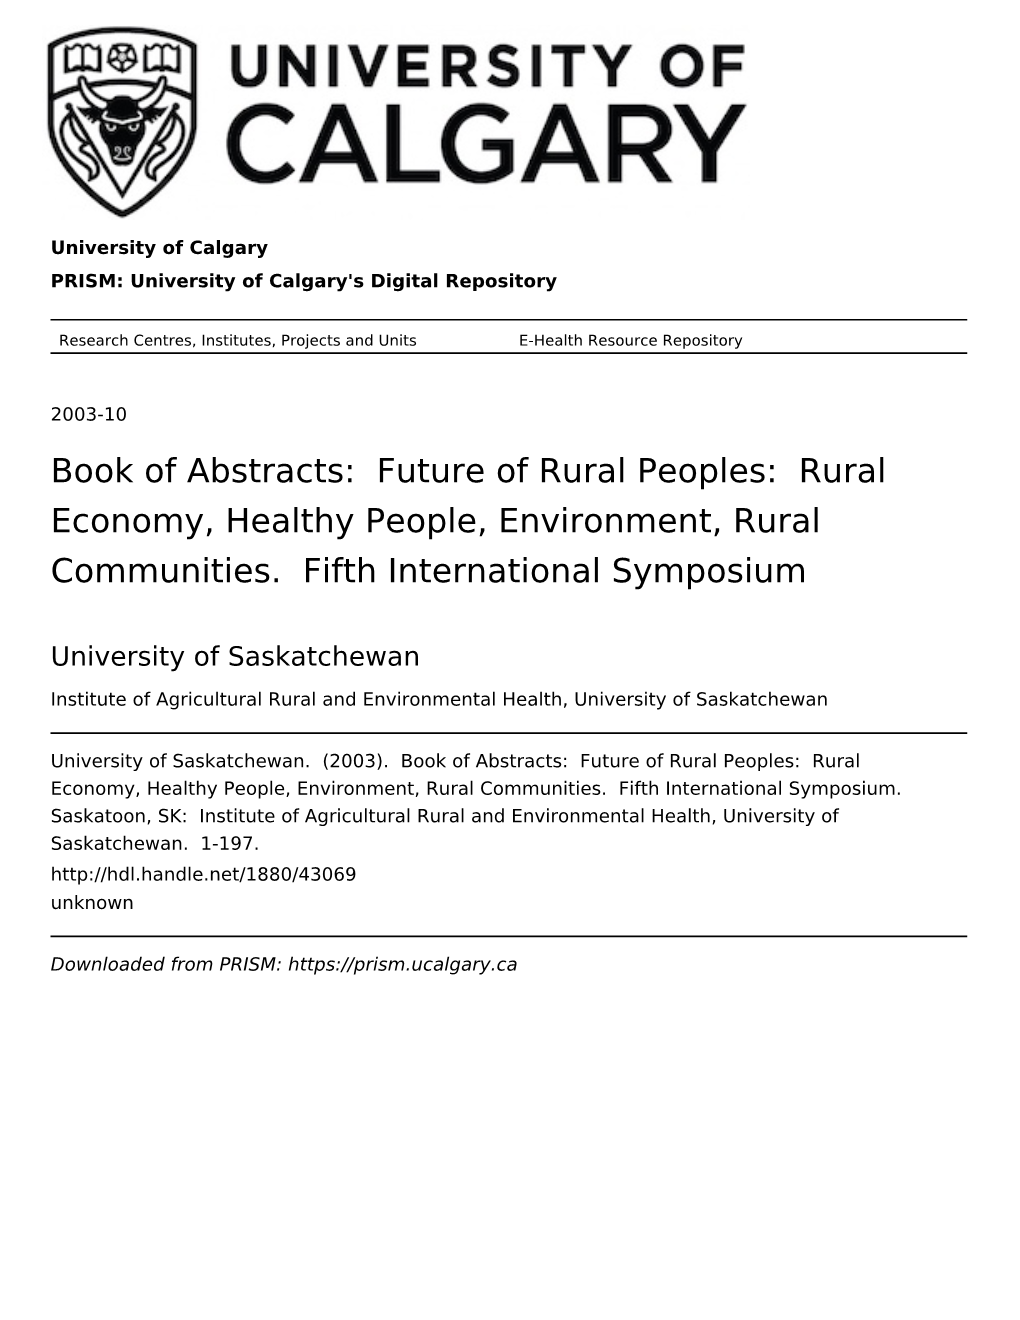 Future of Rural Peoples: Rural Economy, Healthy People, Environment, Rural Communities